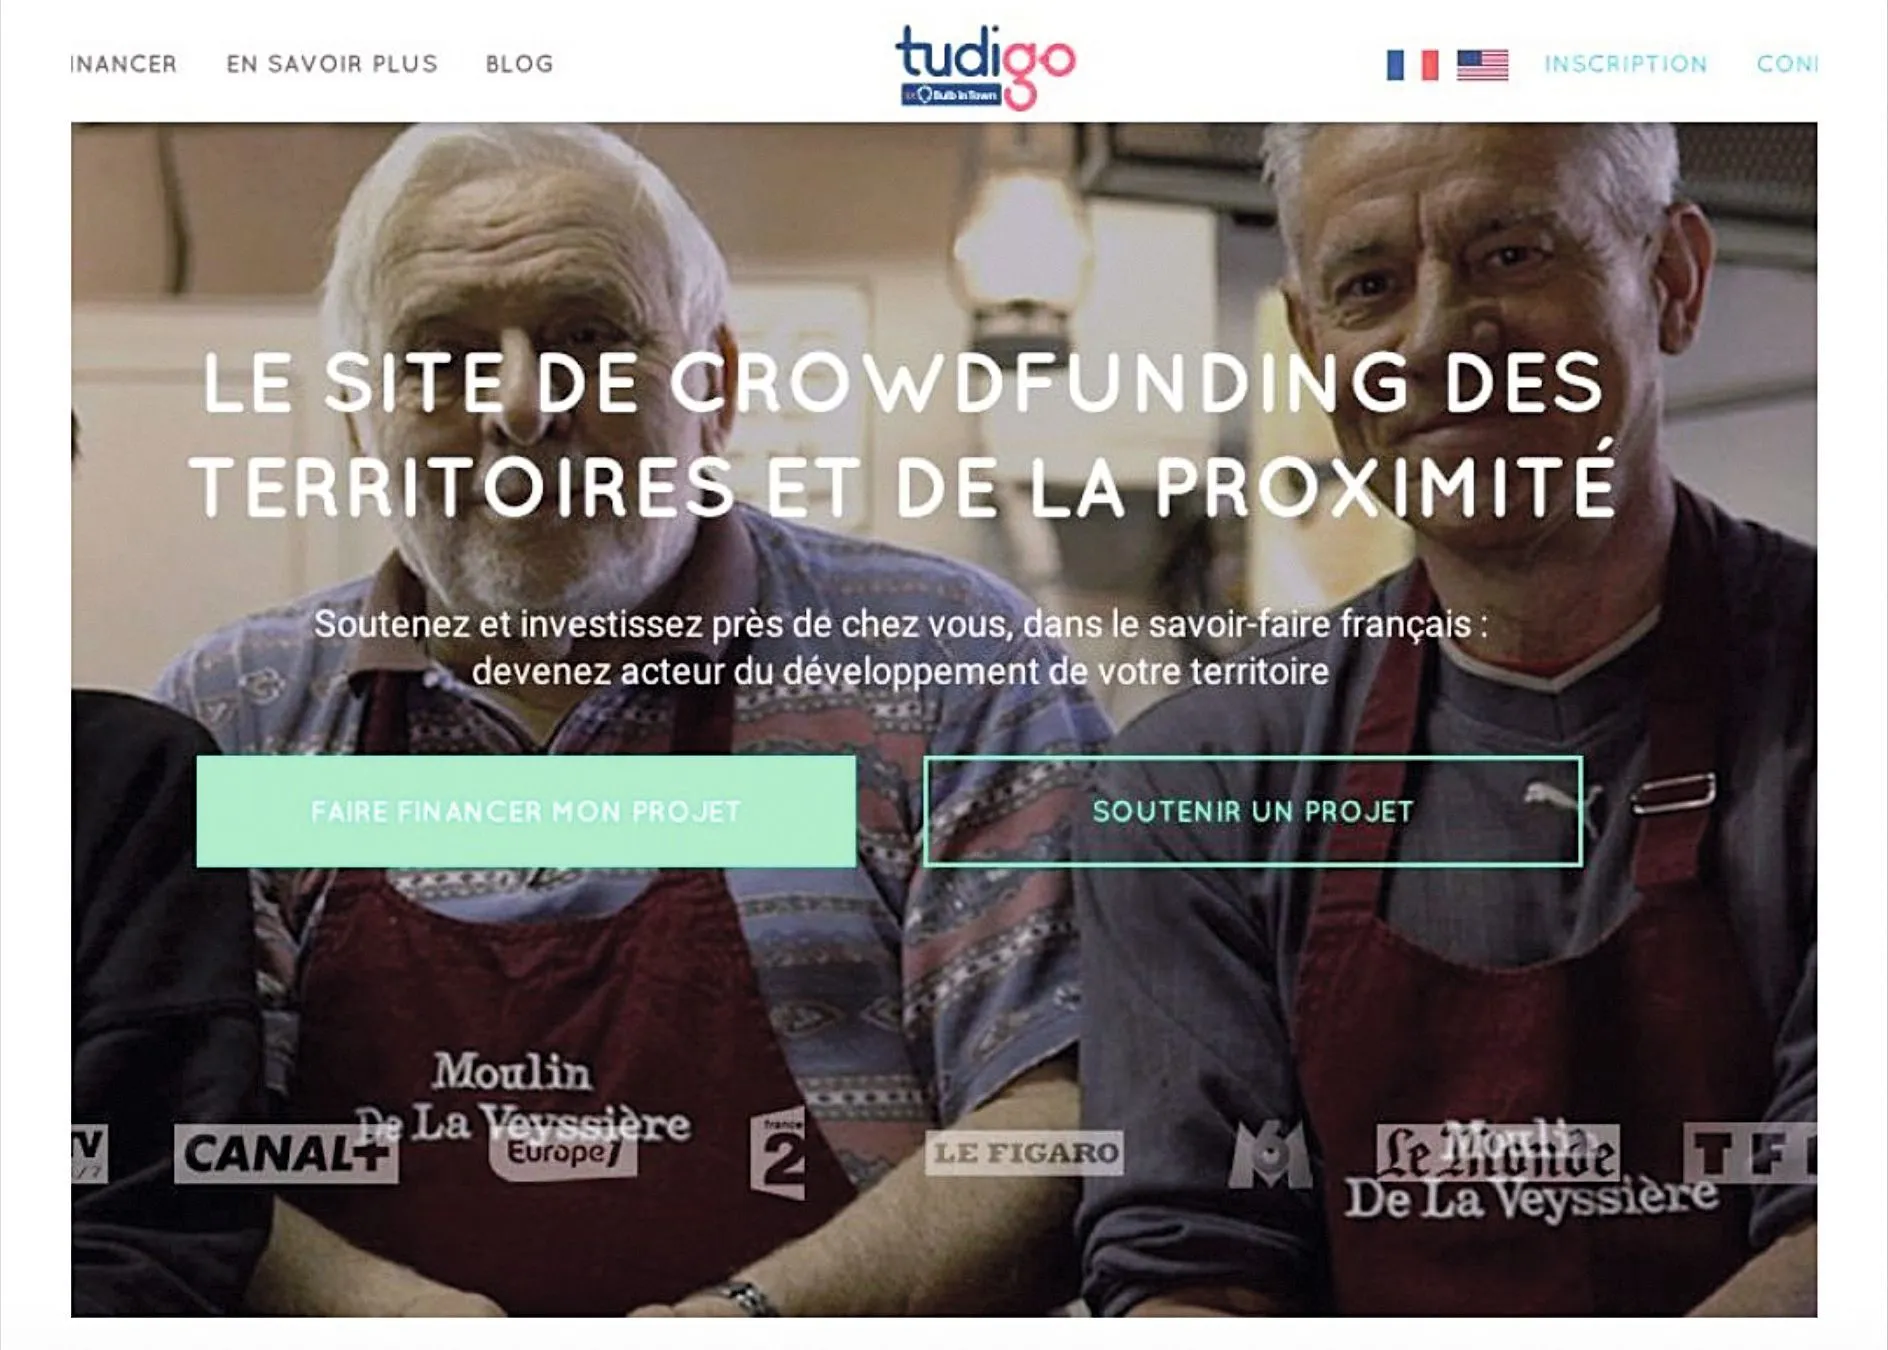 age d'accueil du site de crowdfunding Tudigo.